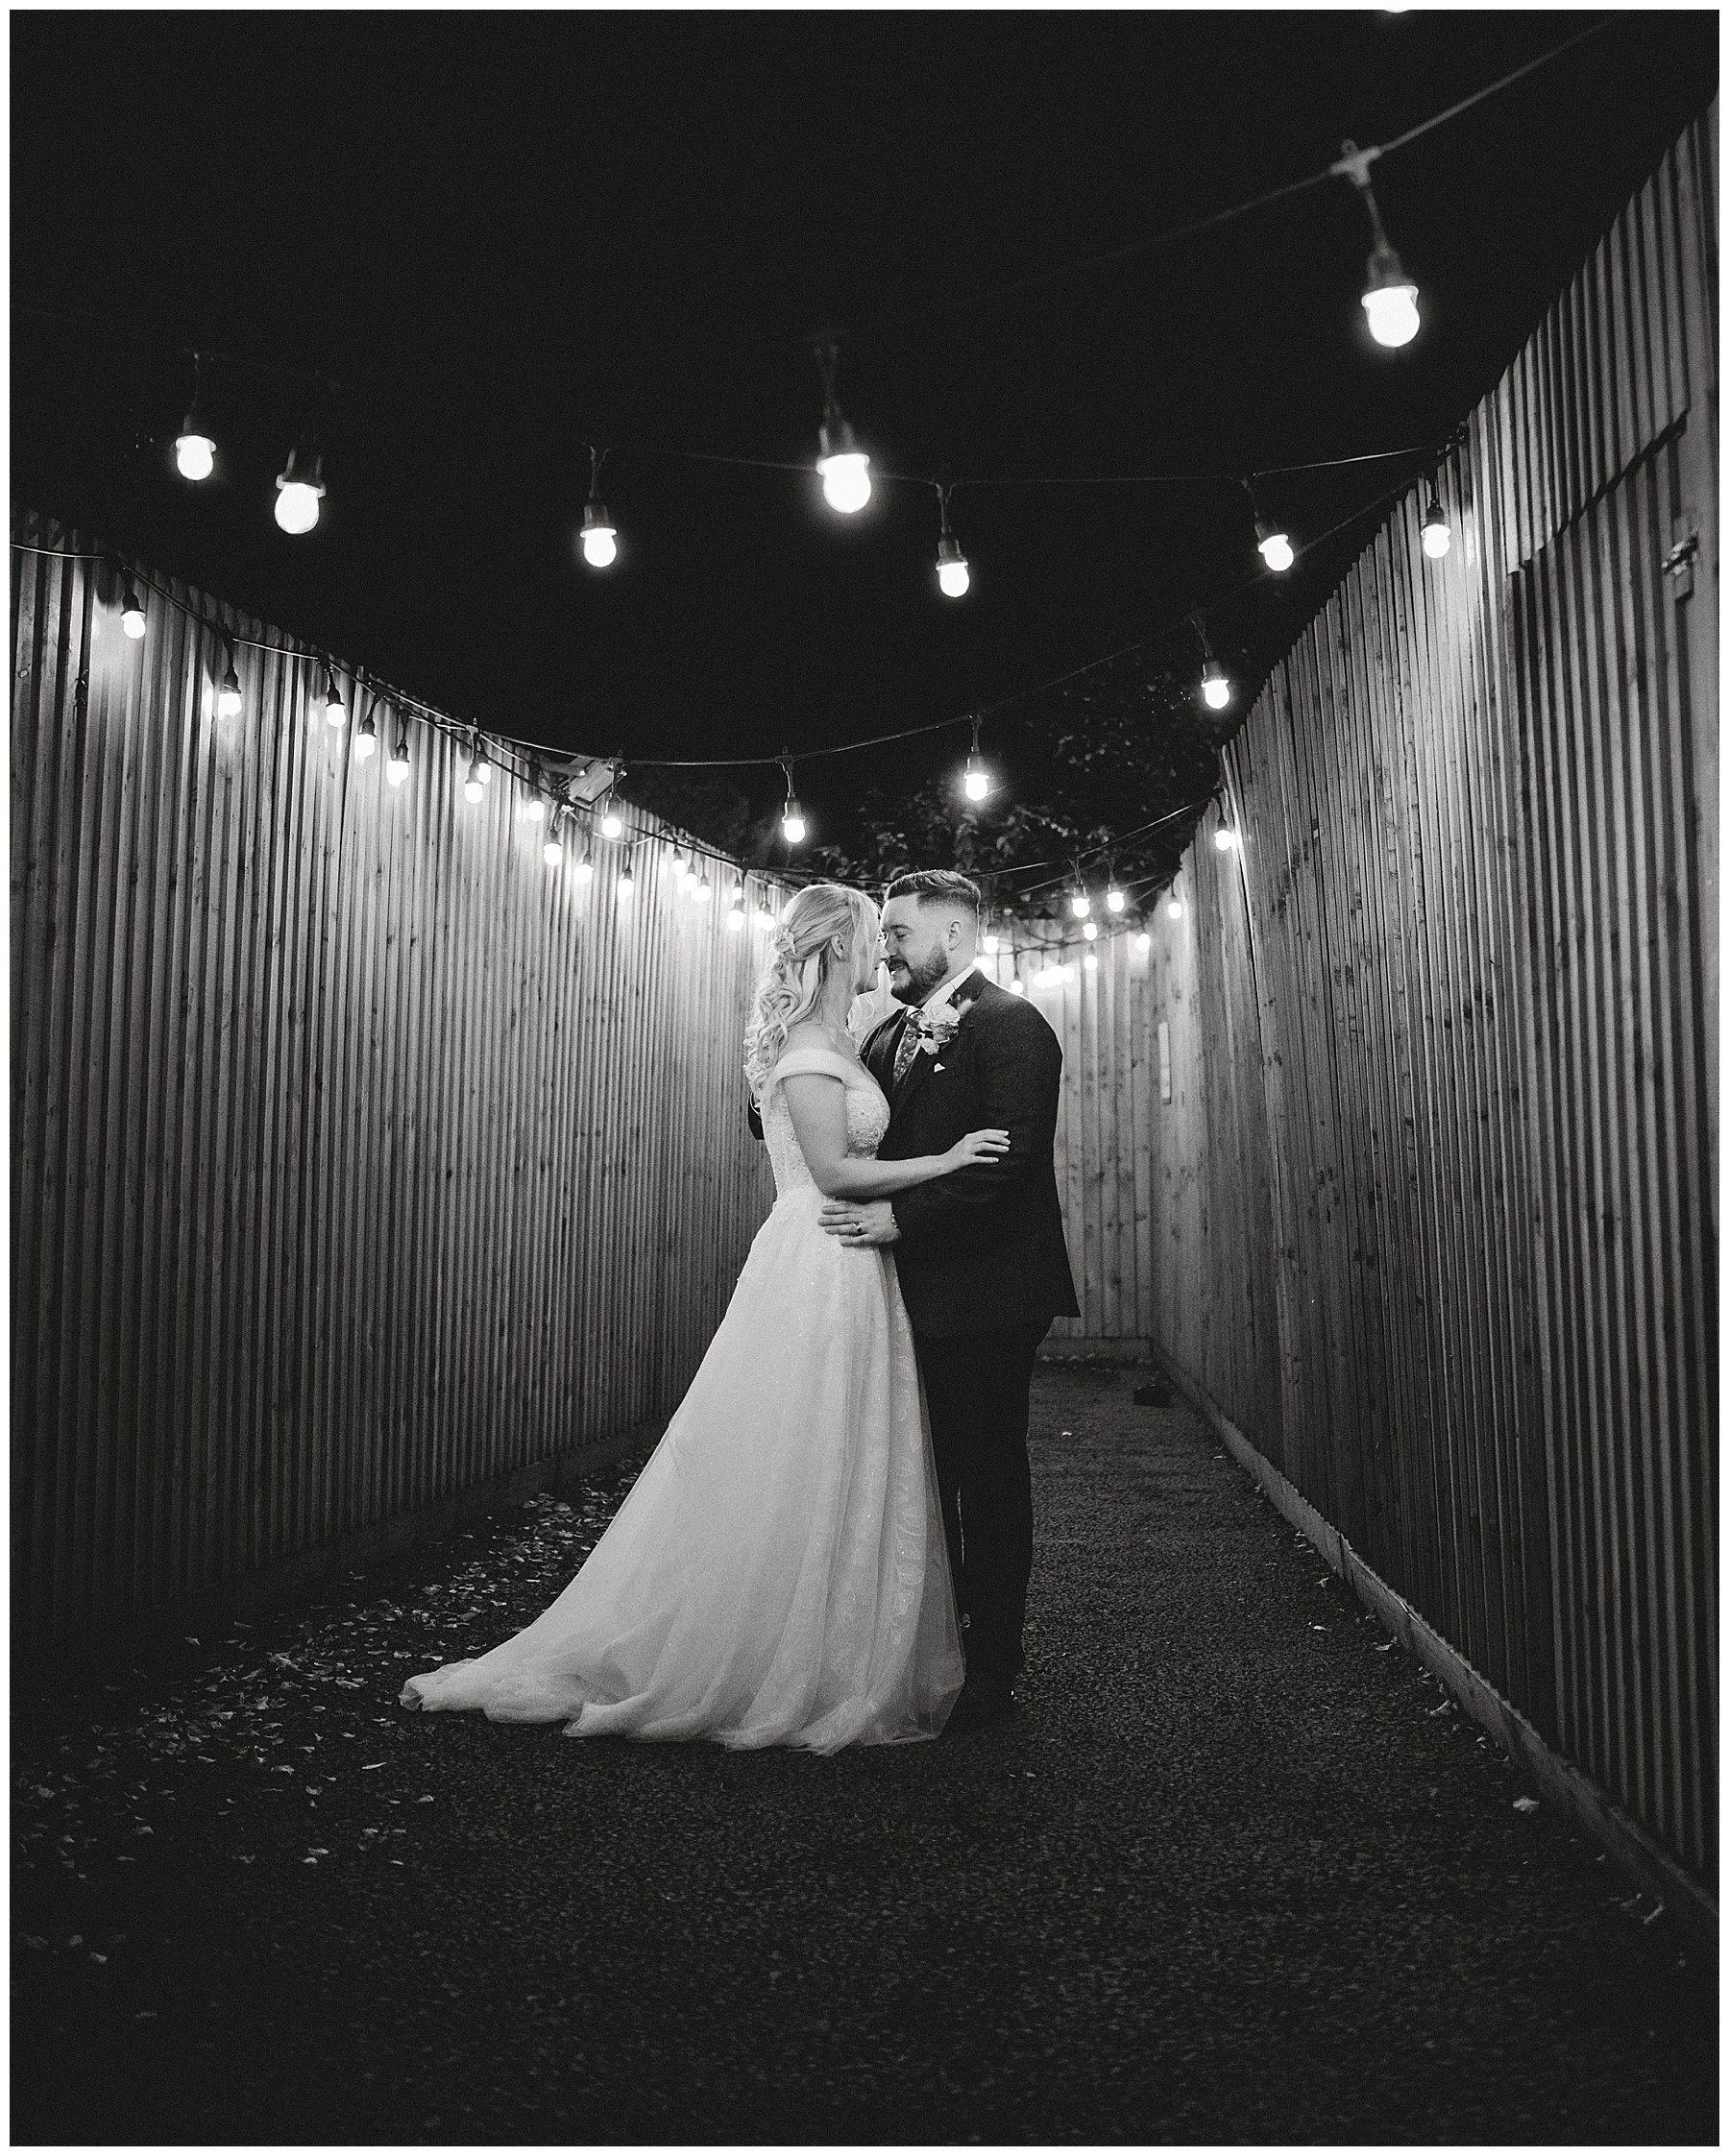 Wedding Photos Under Fairy Lights